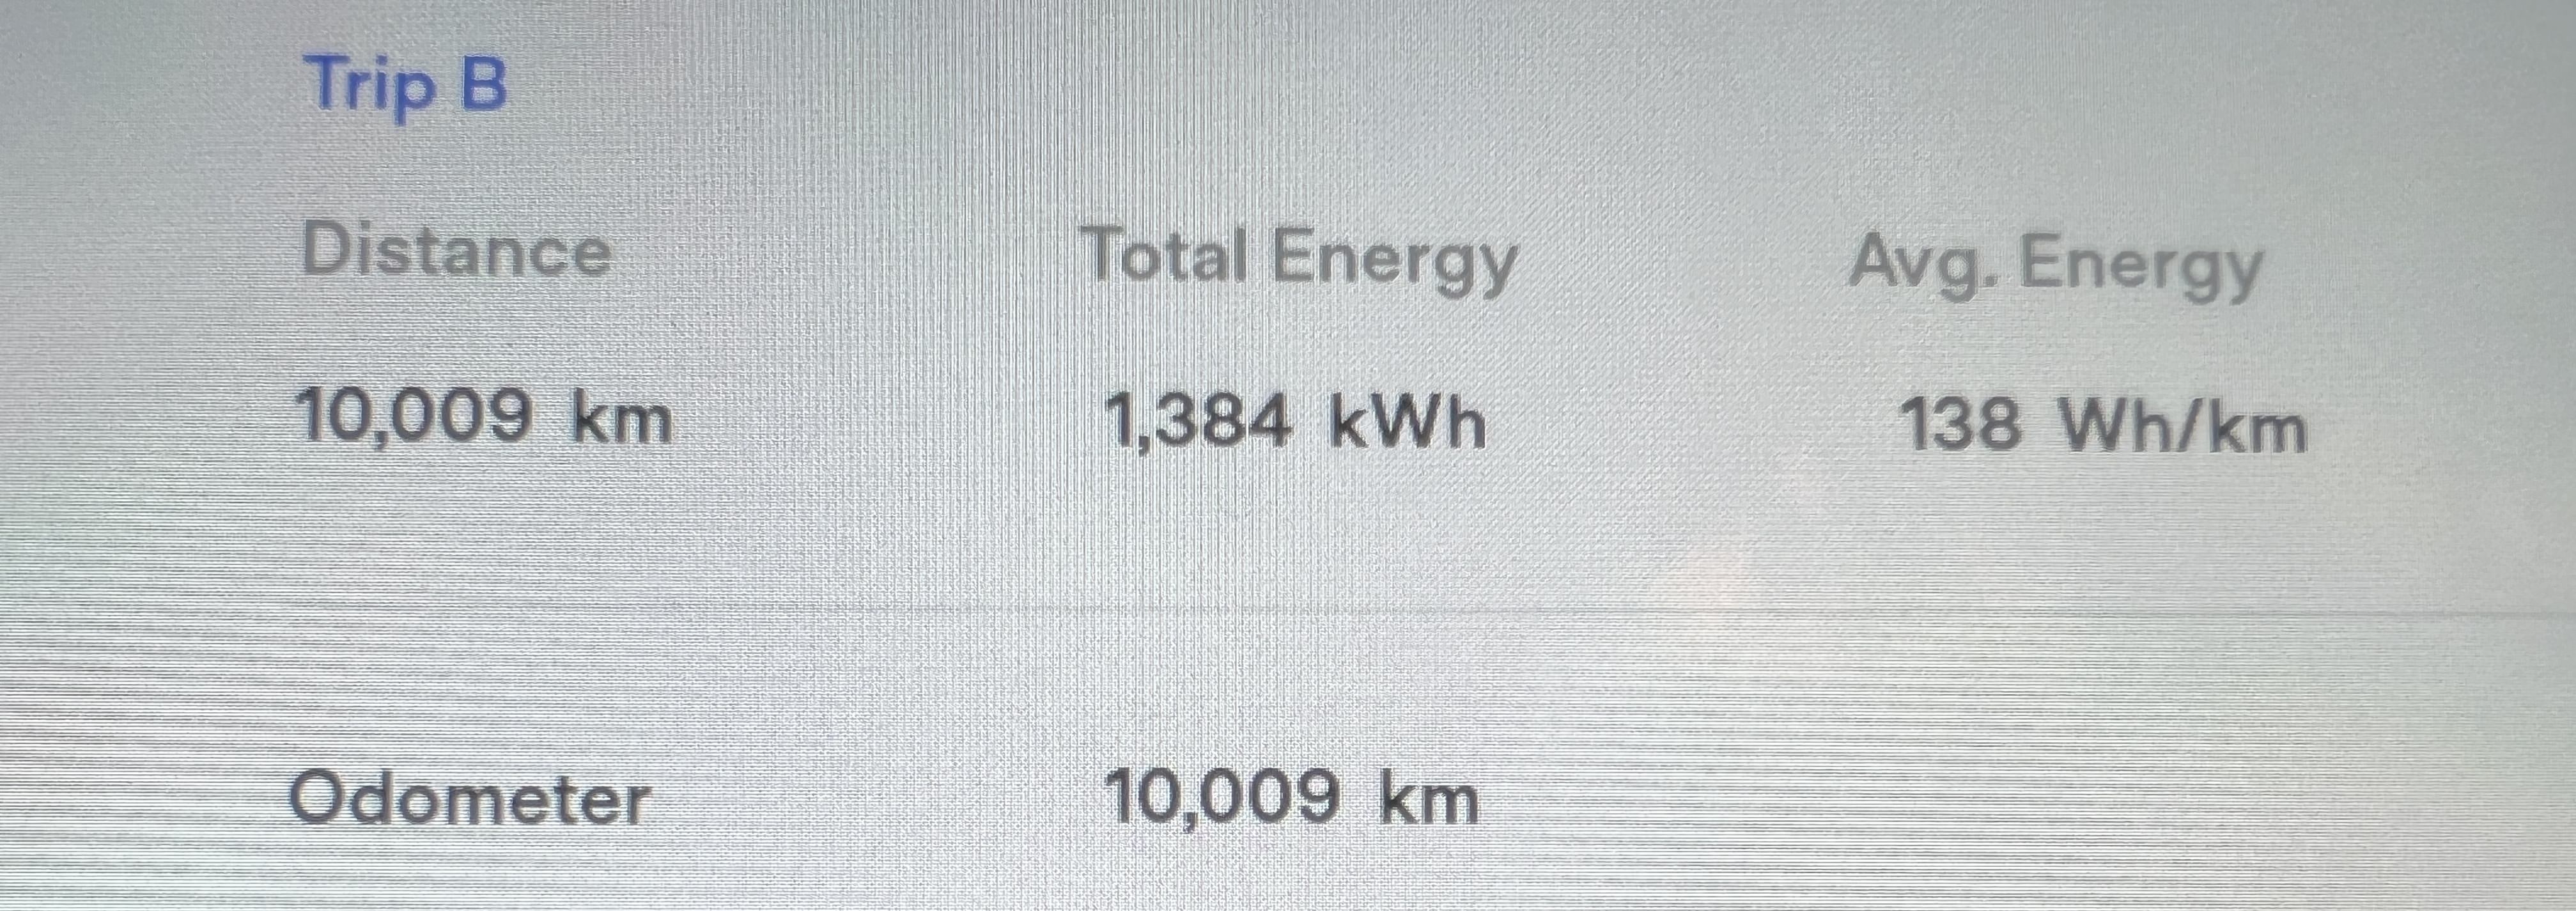 138 Wh/km